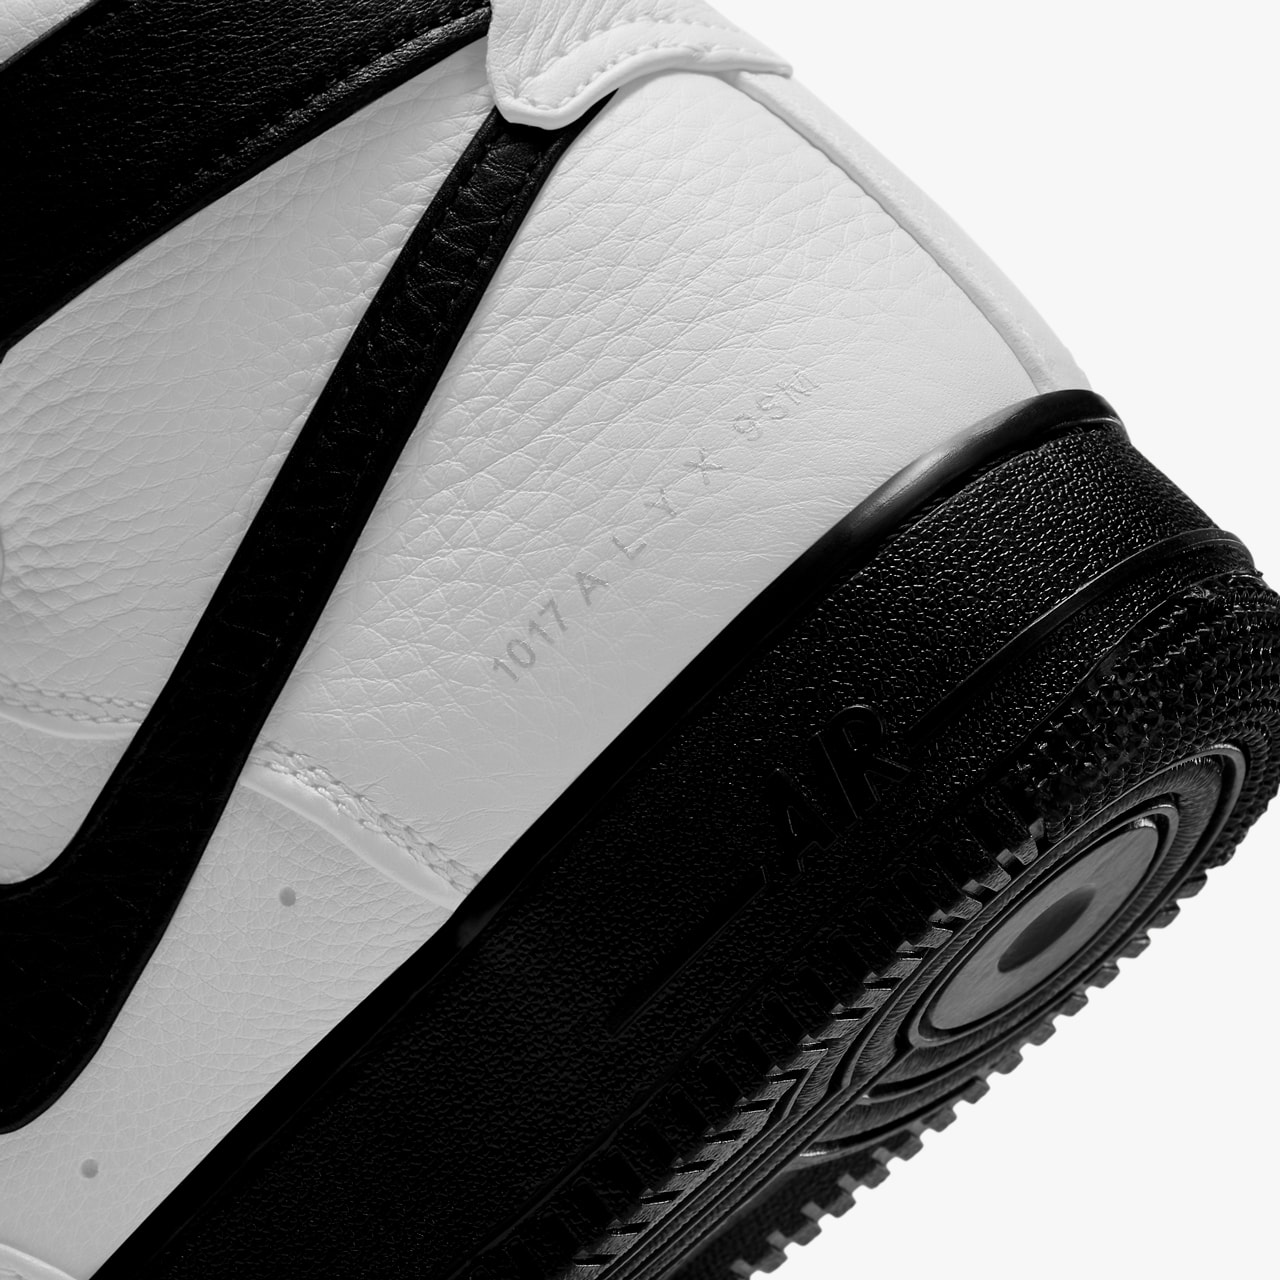 1017 ALYX 9SM Nike Air Force 1 High White black cq4018 101 menswear streetwear Matthew m williams designer shoes kicks trainers runners sneakers hi